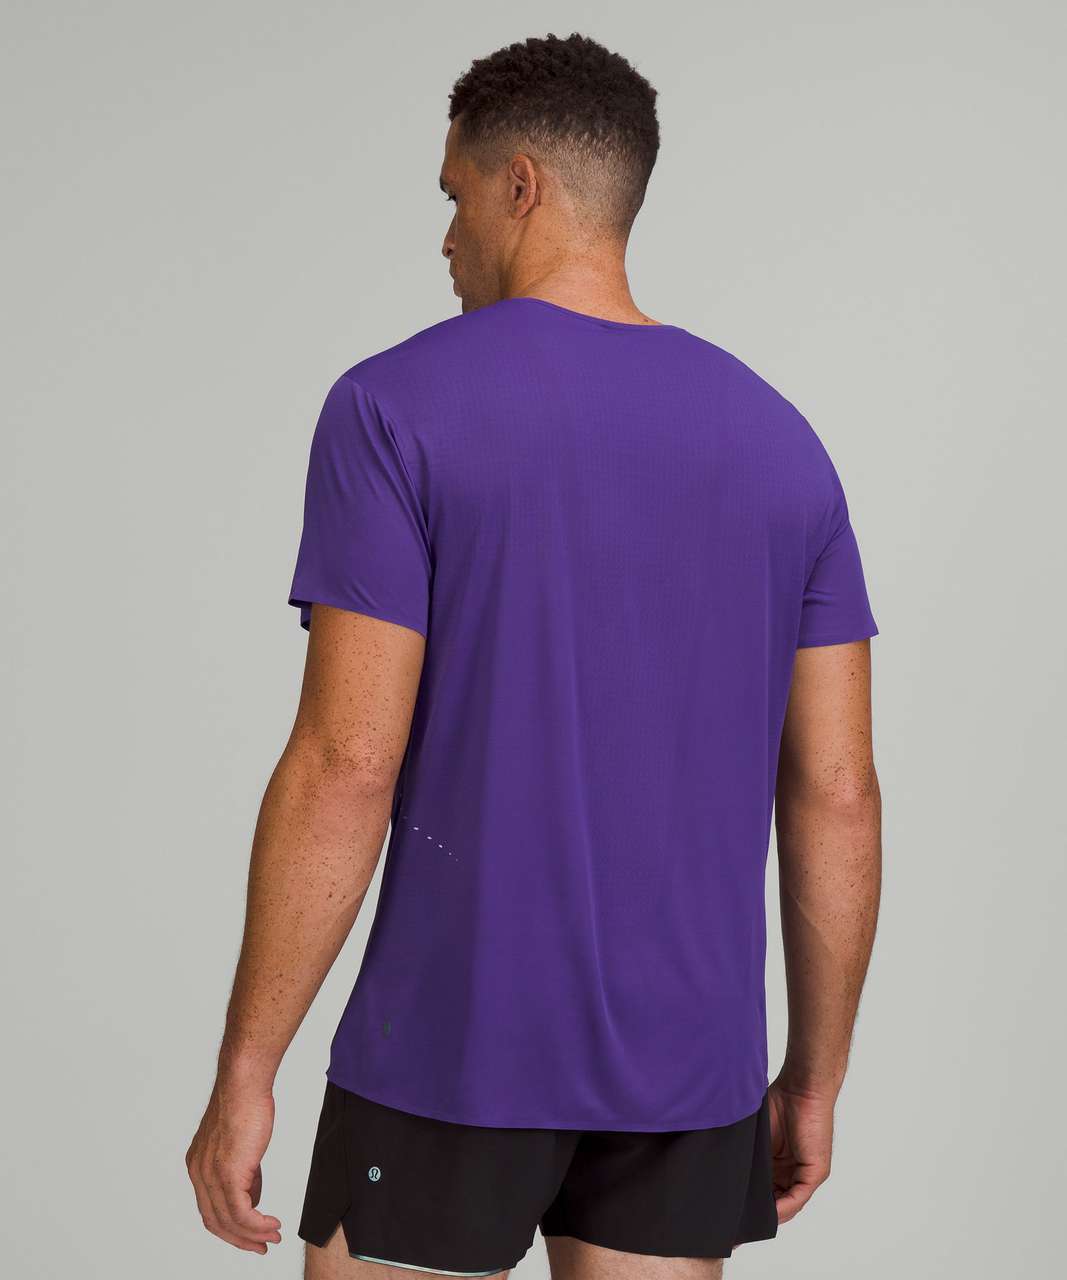 Lululemon Fast and Free Short Sleeve Shirt - Petrol Purple